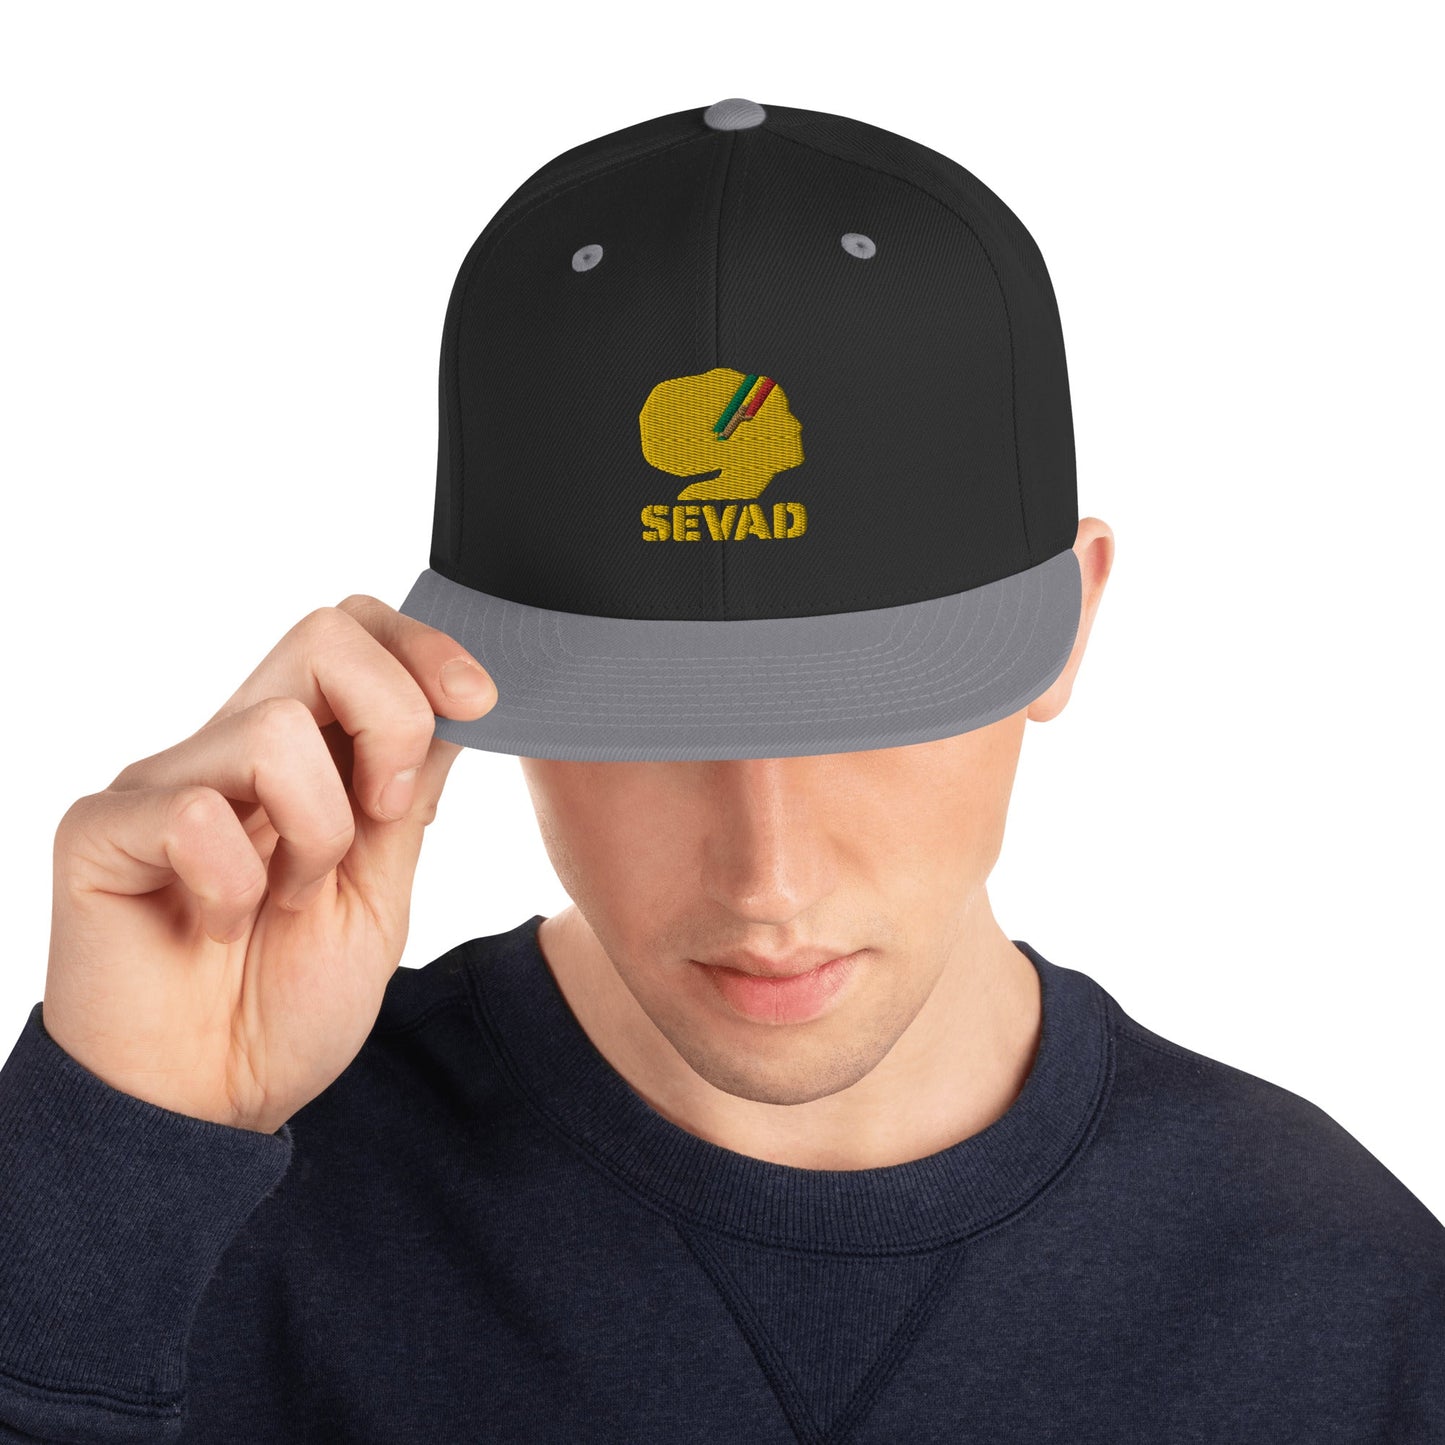 SEVAD Snapback Hat - SEVAD MUSIC HOUSE - Snapback Hat - SEVAD MUSIC HOUSE - 7123262_4795 - Black/ Silver - - SEVAD Snapback Hat